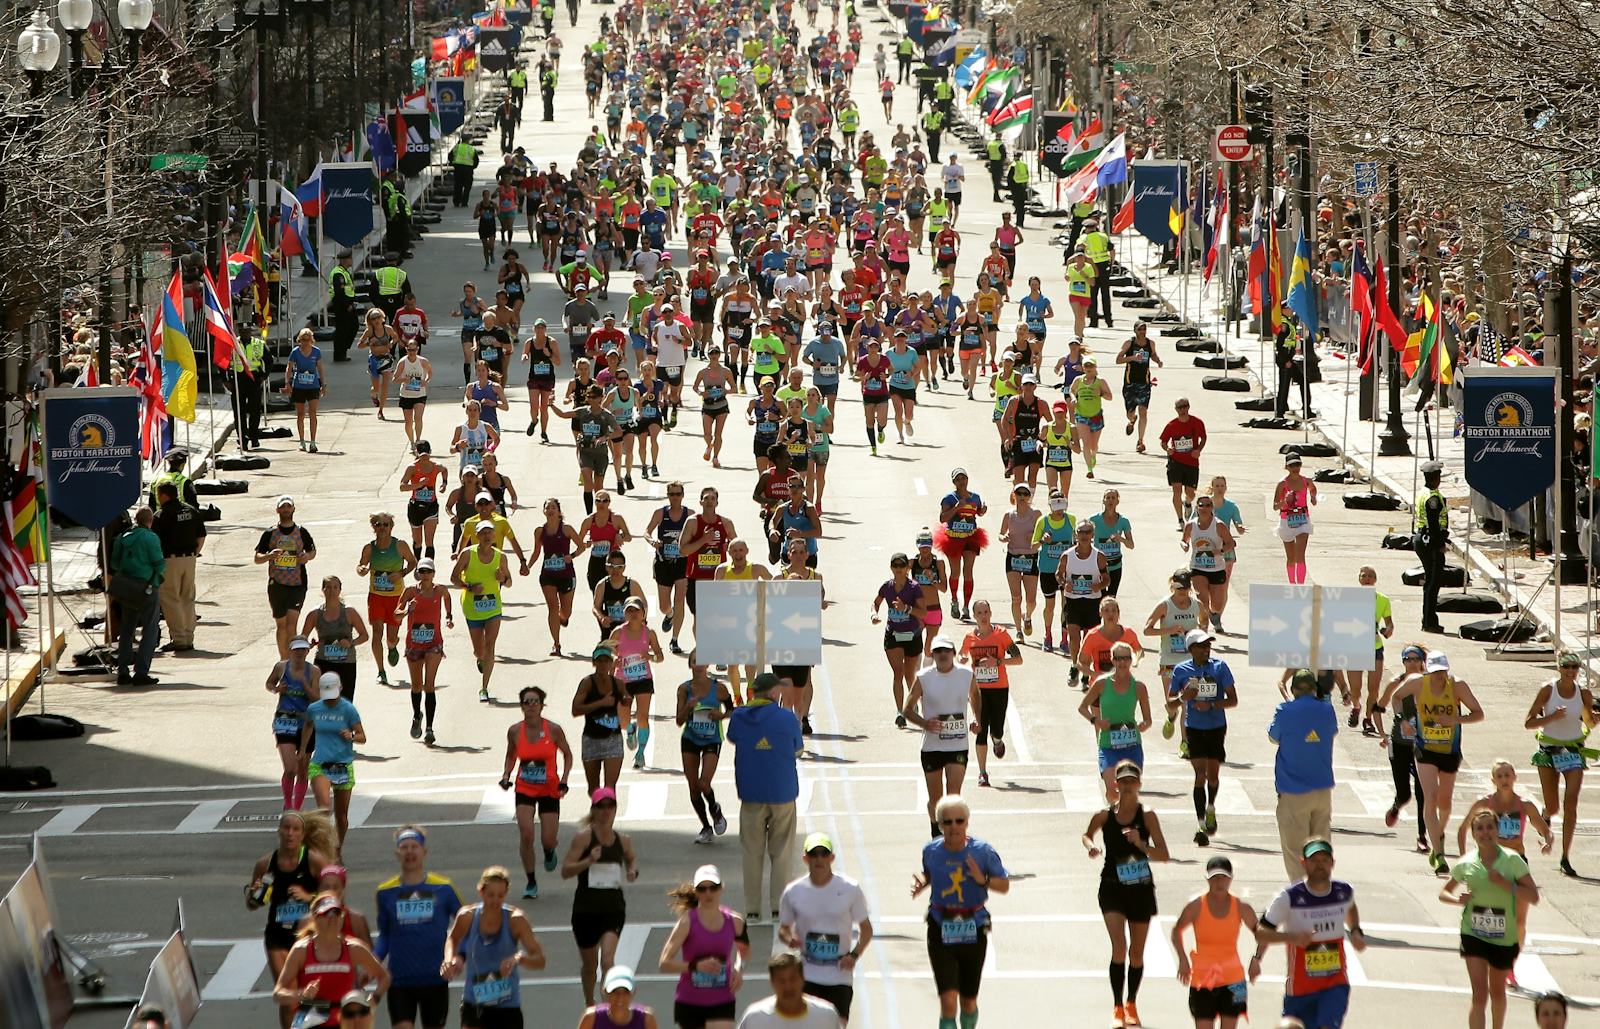 Rahaf Khatib Ran The Boston Marathon To Raise $16,000 For Syrian Refugees